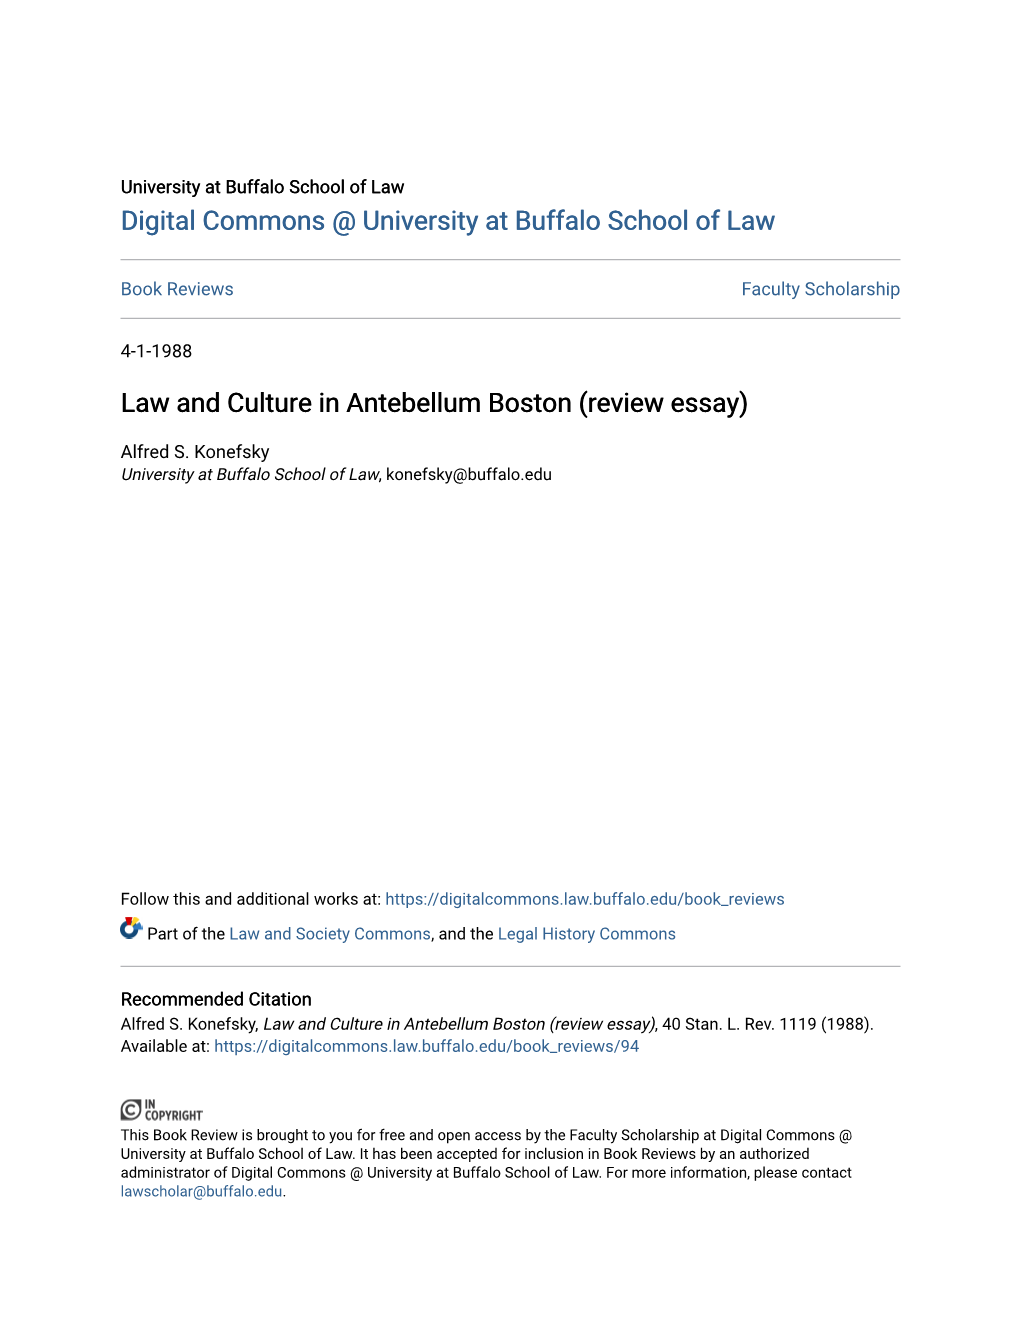 Law and Culture in Antebellum Boston (Review Essay)